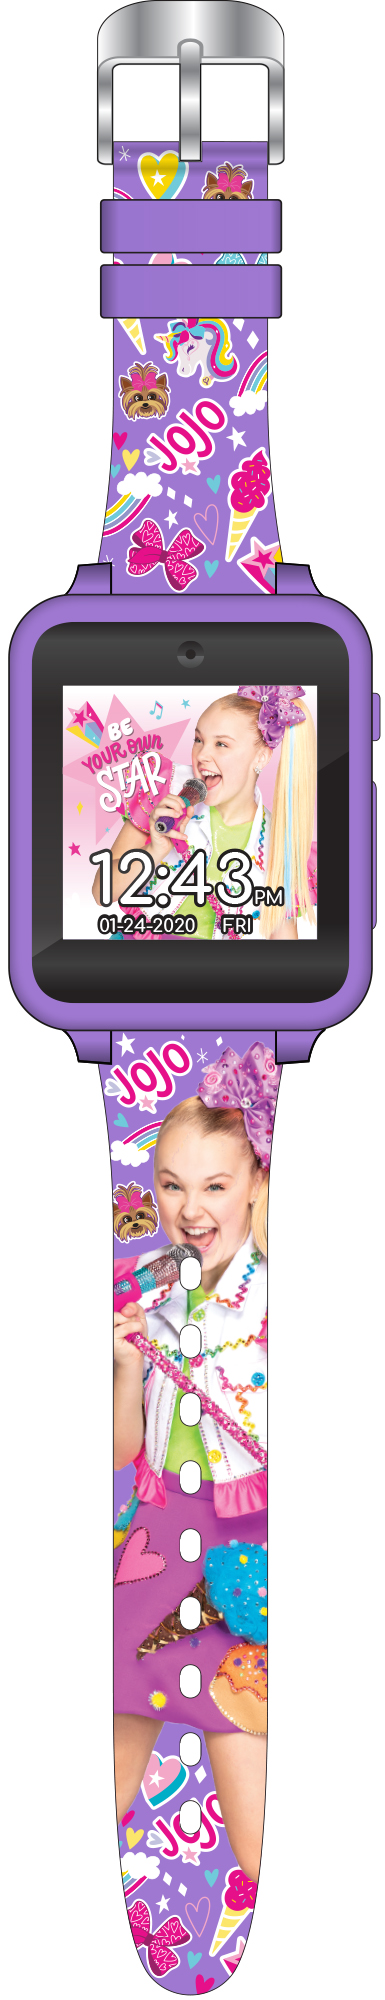 Jojo Siwa Unisex Child iTime Interactive Smart Watch with Silicone Strap 40mm in Purple (JOJ4327WM) - image 2 of 2